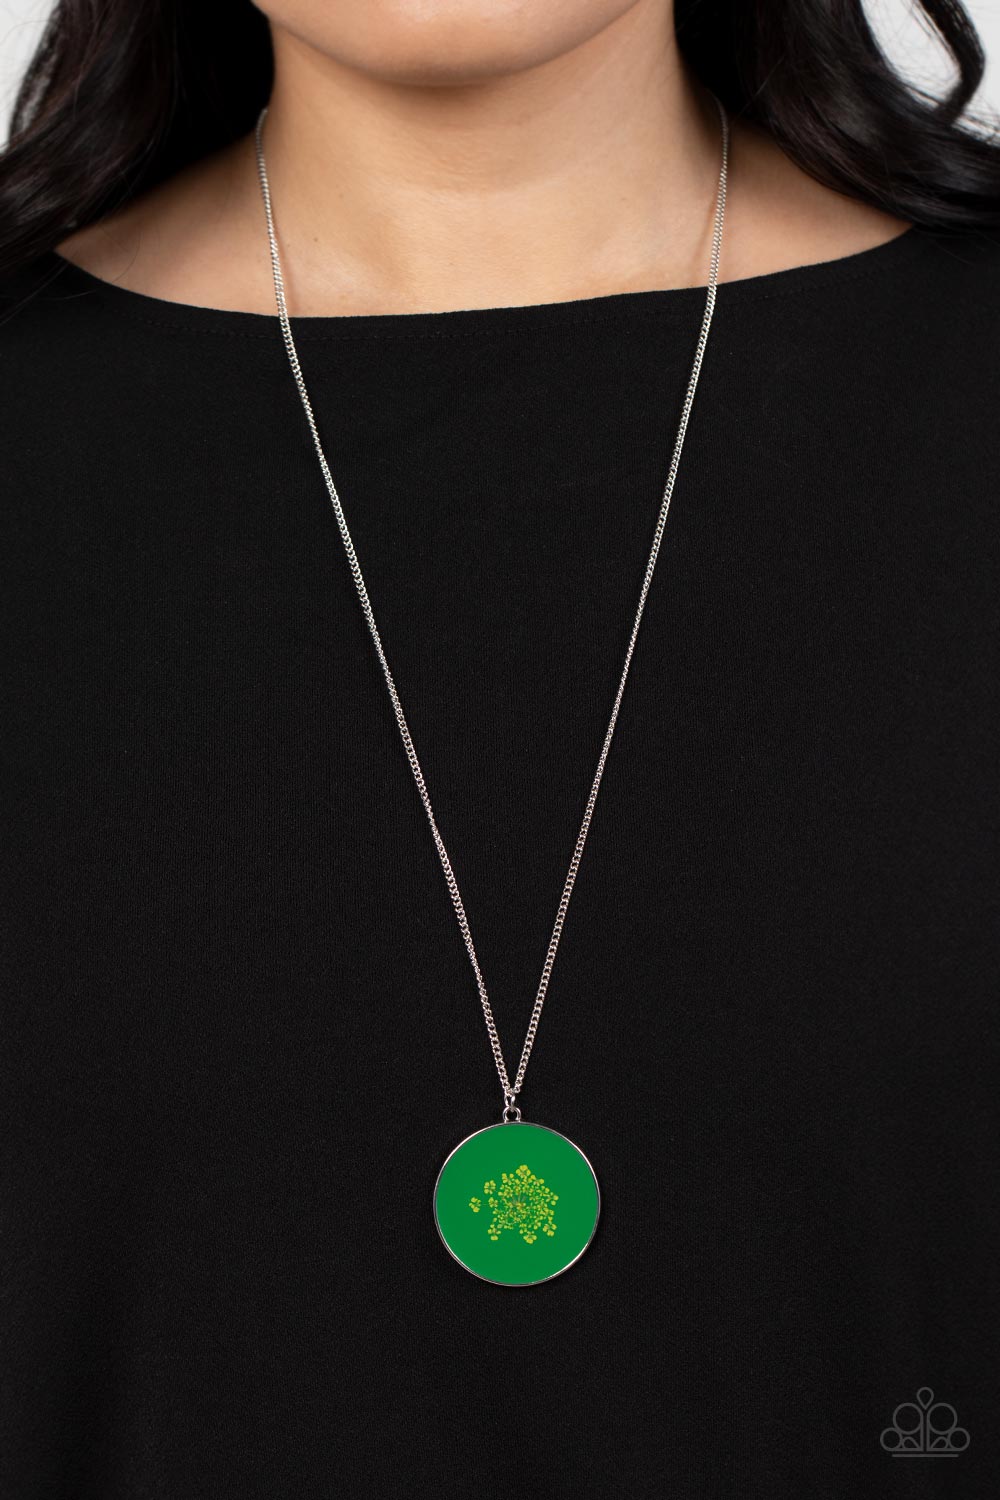 Paparazzi Accessories: Prairie Picnic - Green Leprechaun Backdrop Necklace